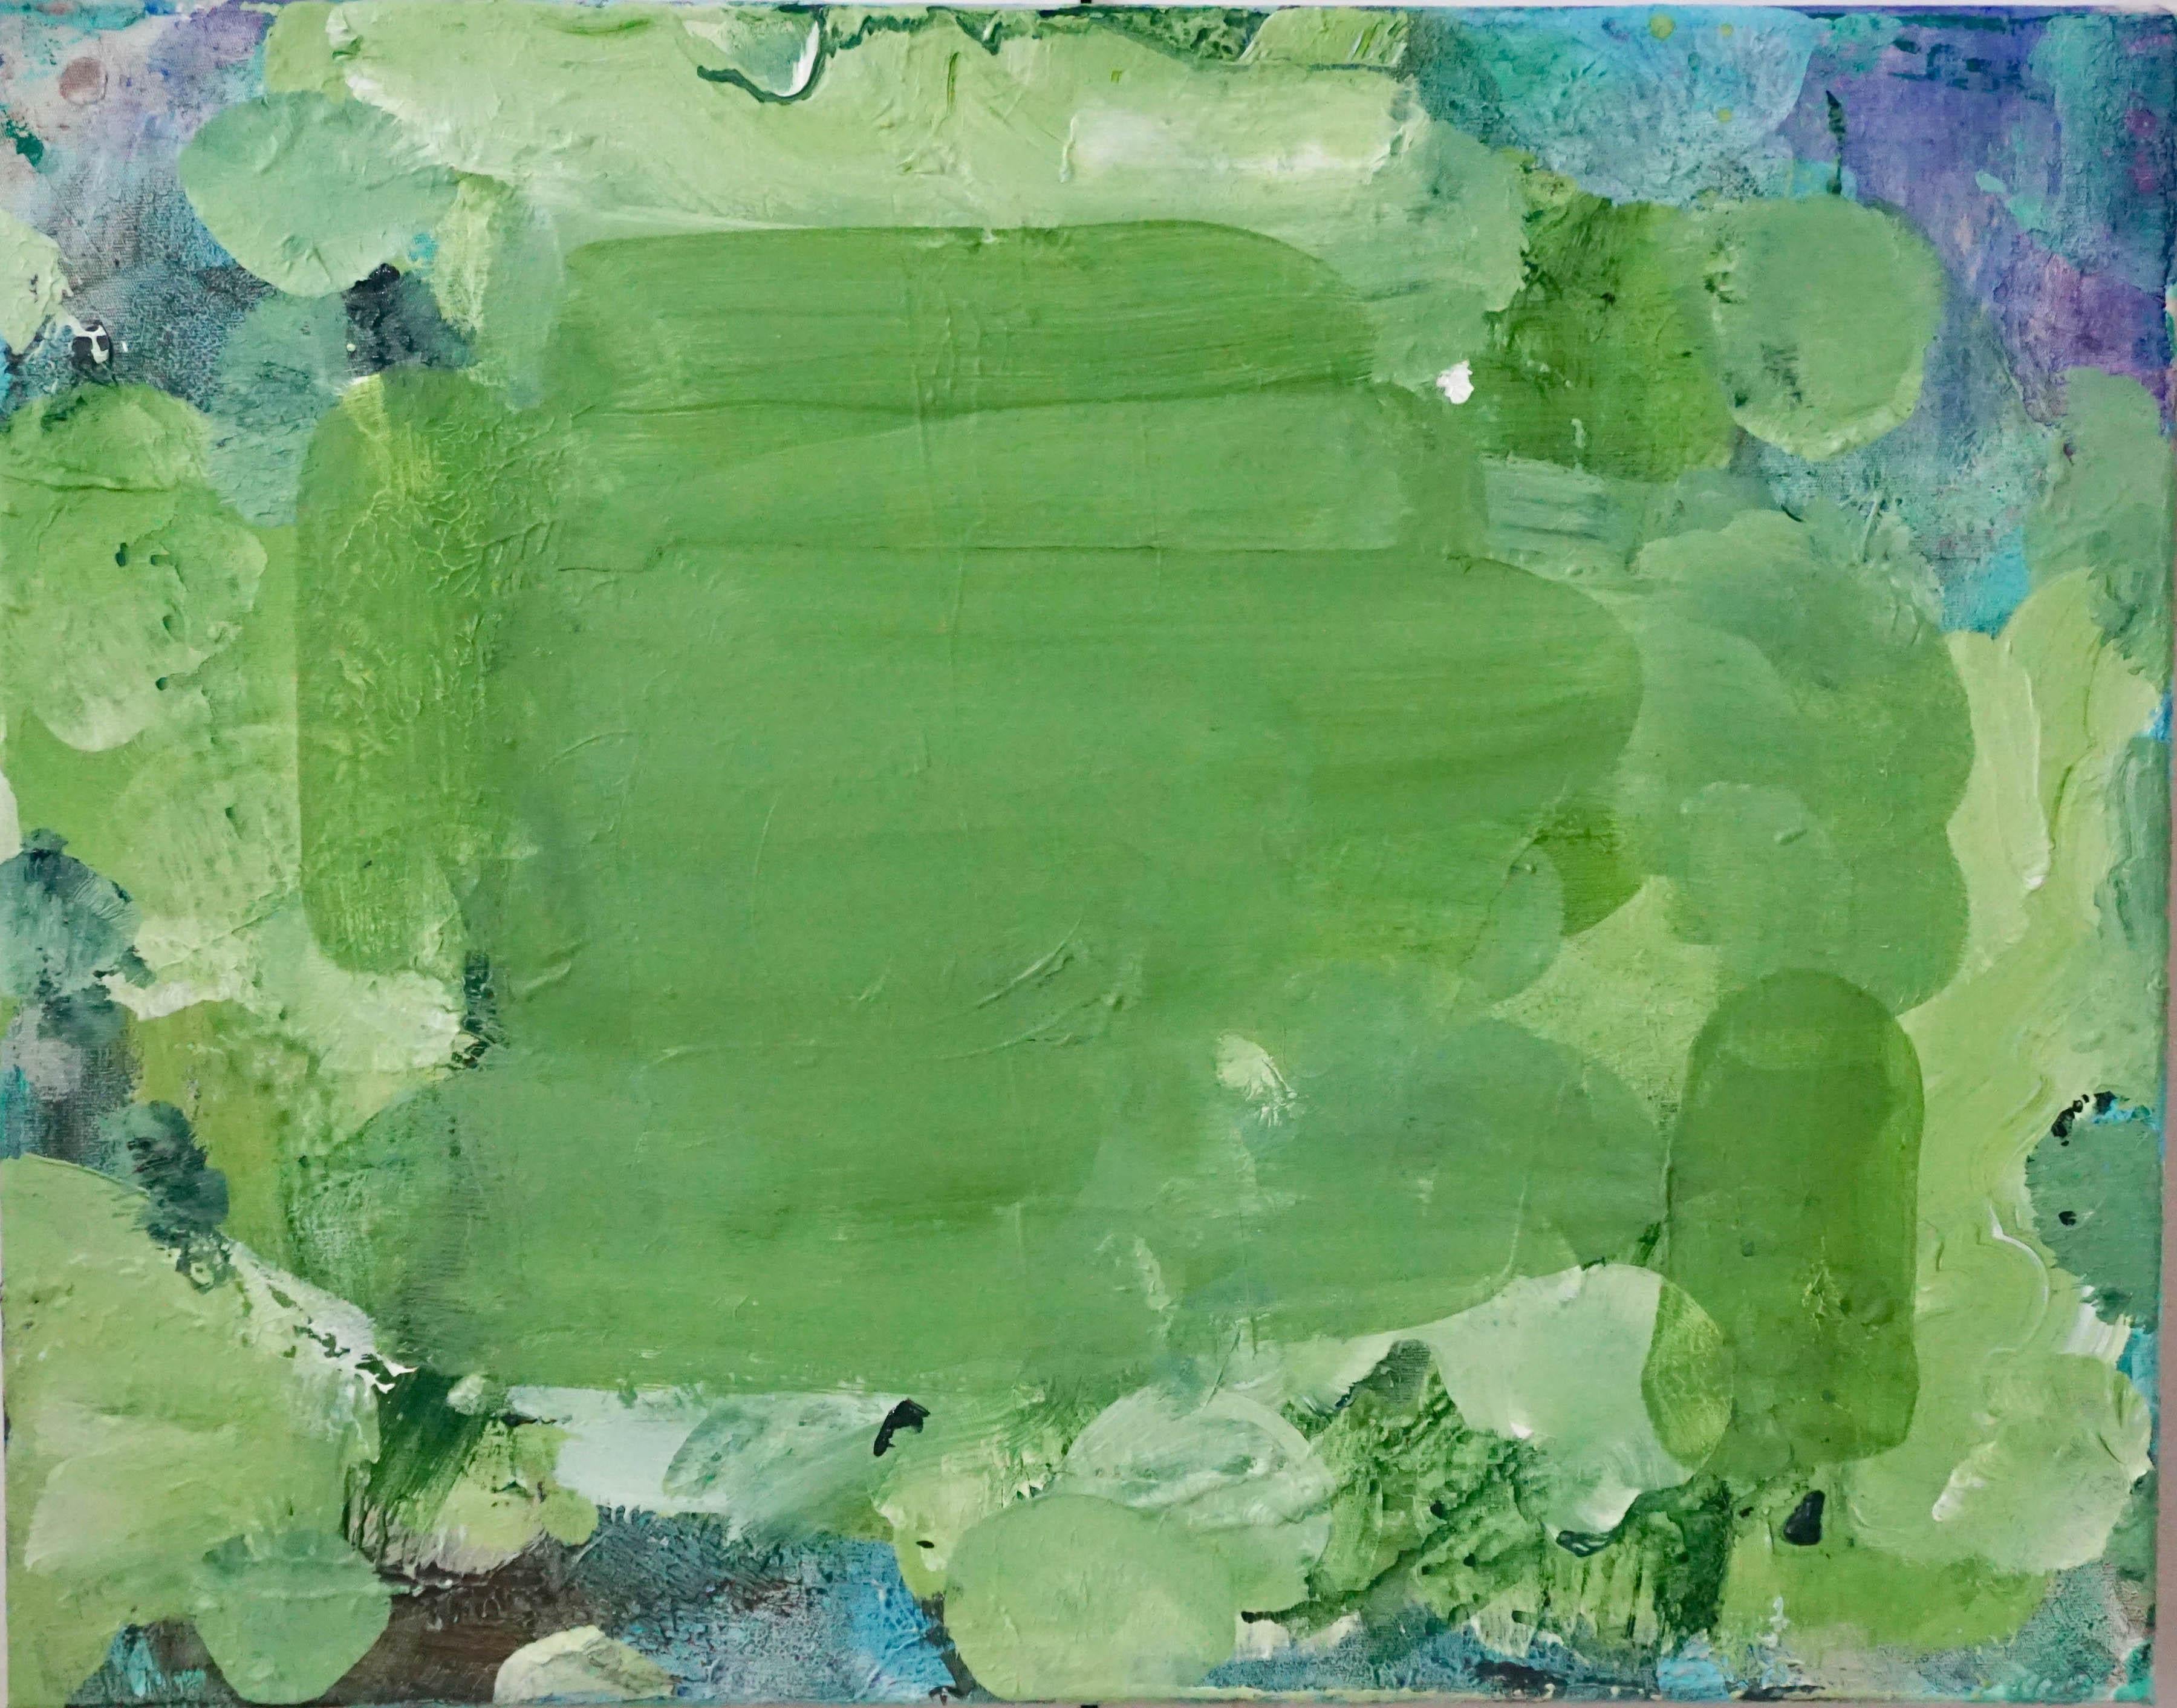 Abstract Painting Lisa Fellerson - Smile, peinture expressionniste abstraite vert vif, luxuriante et verdoyante